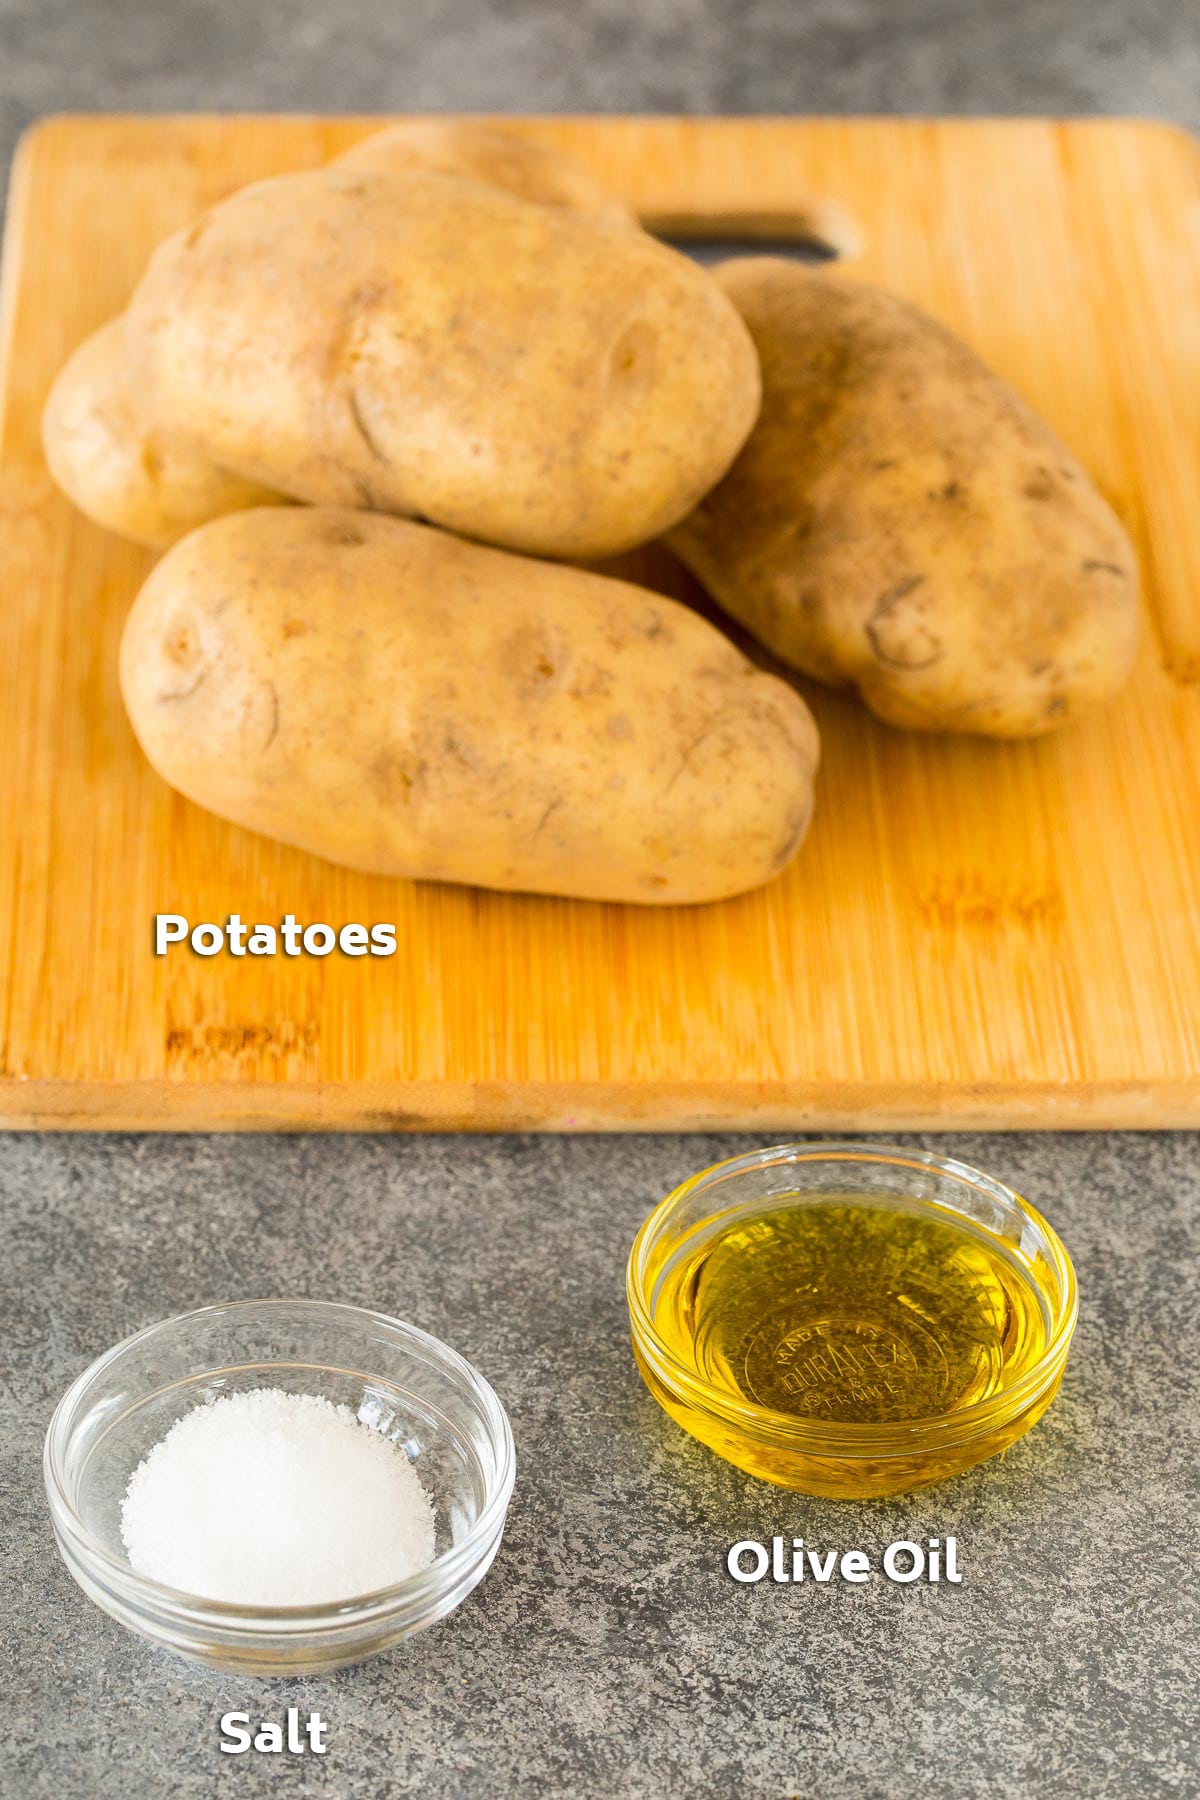 Potatoes, salt and olive oil.